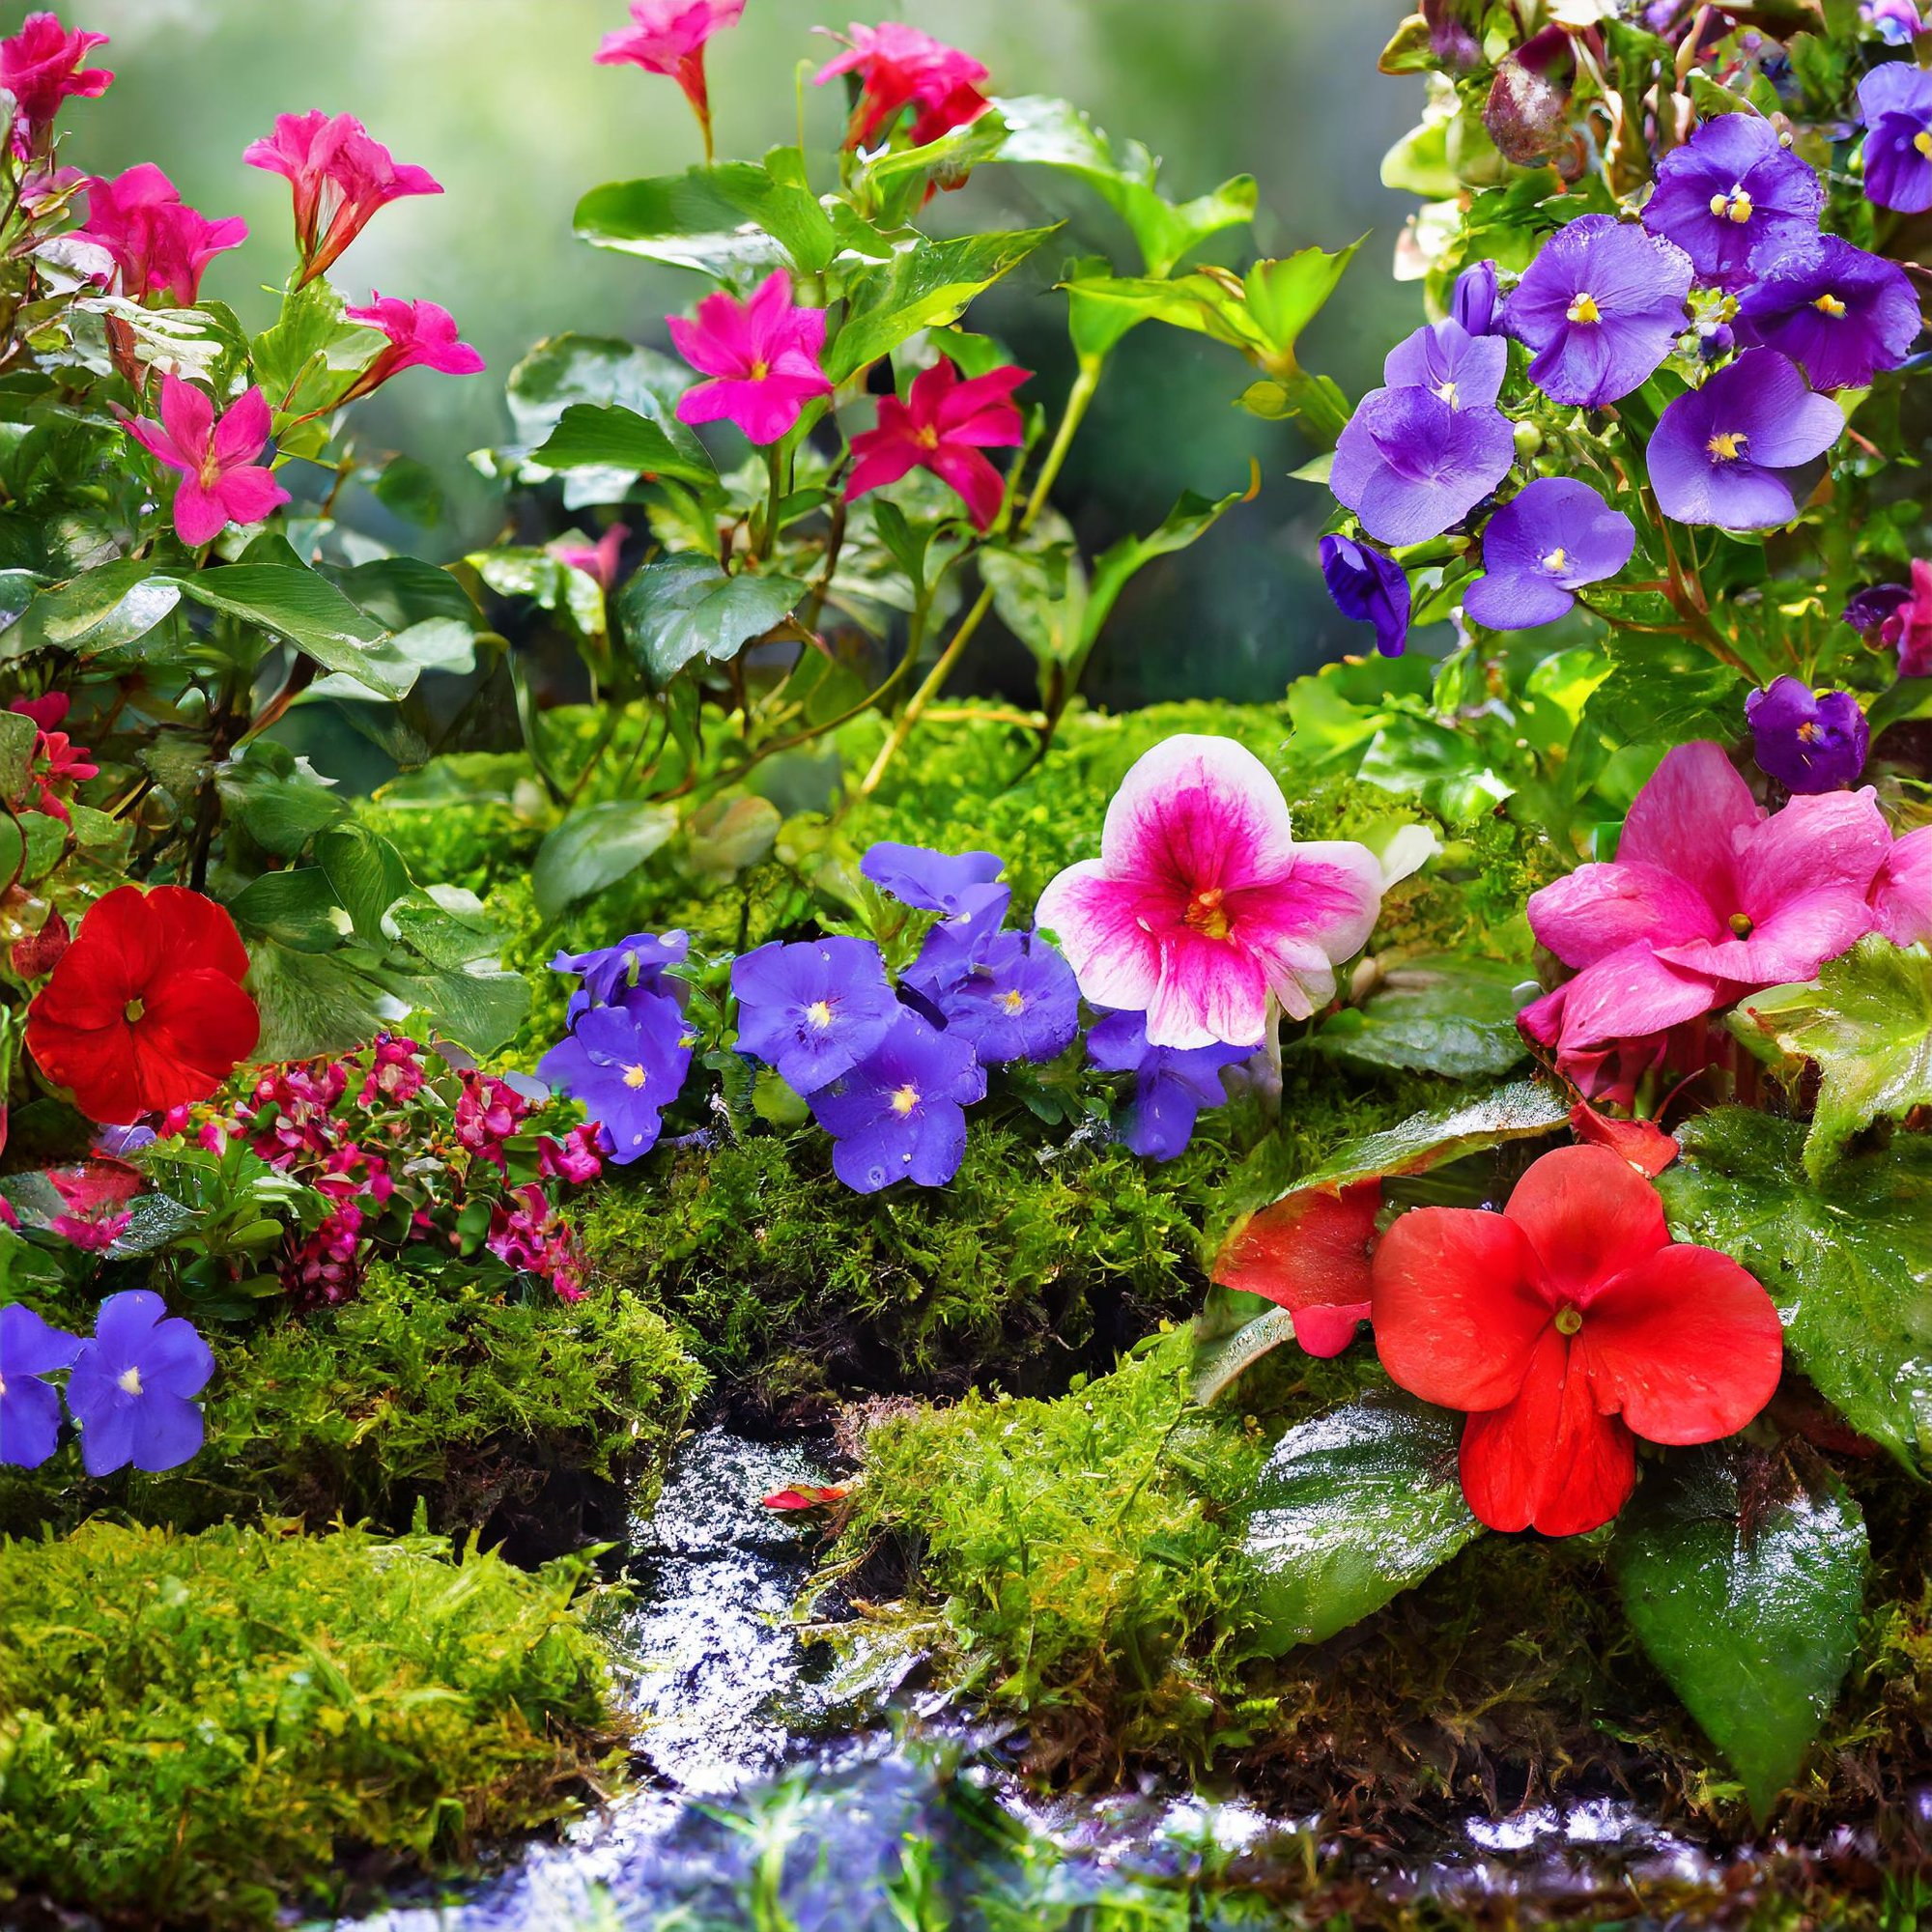 Firefly photo-realistic image of garden with moss rose, vinca, fan flower, angelonia, impatiens, wax